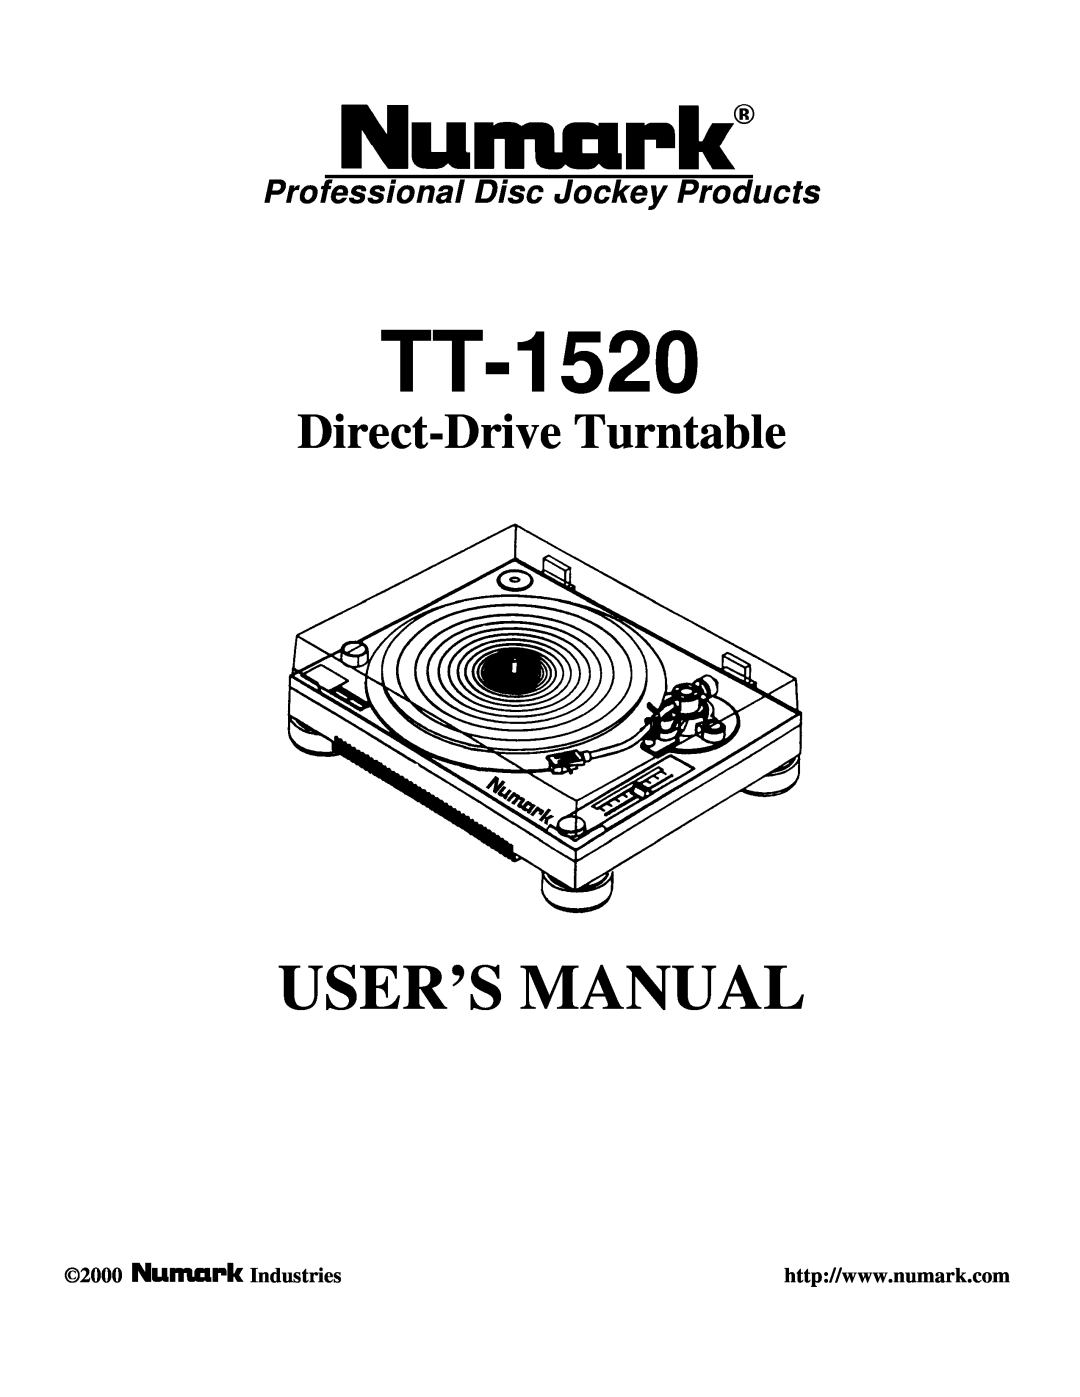 Numark Industries TT-1520 user manual Professional Disc Jockey Products, Direct-DriveTurntable, Industries, 2000 